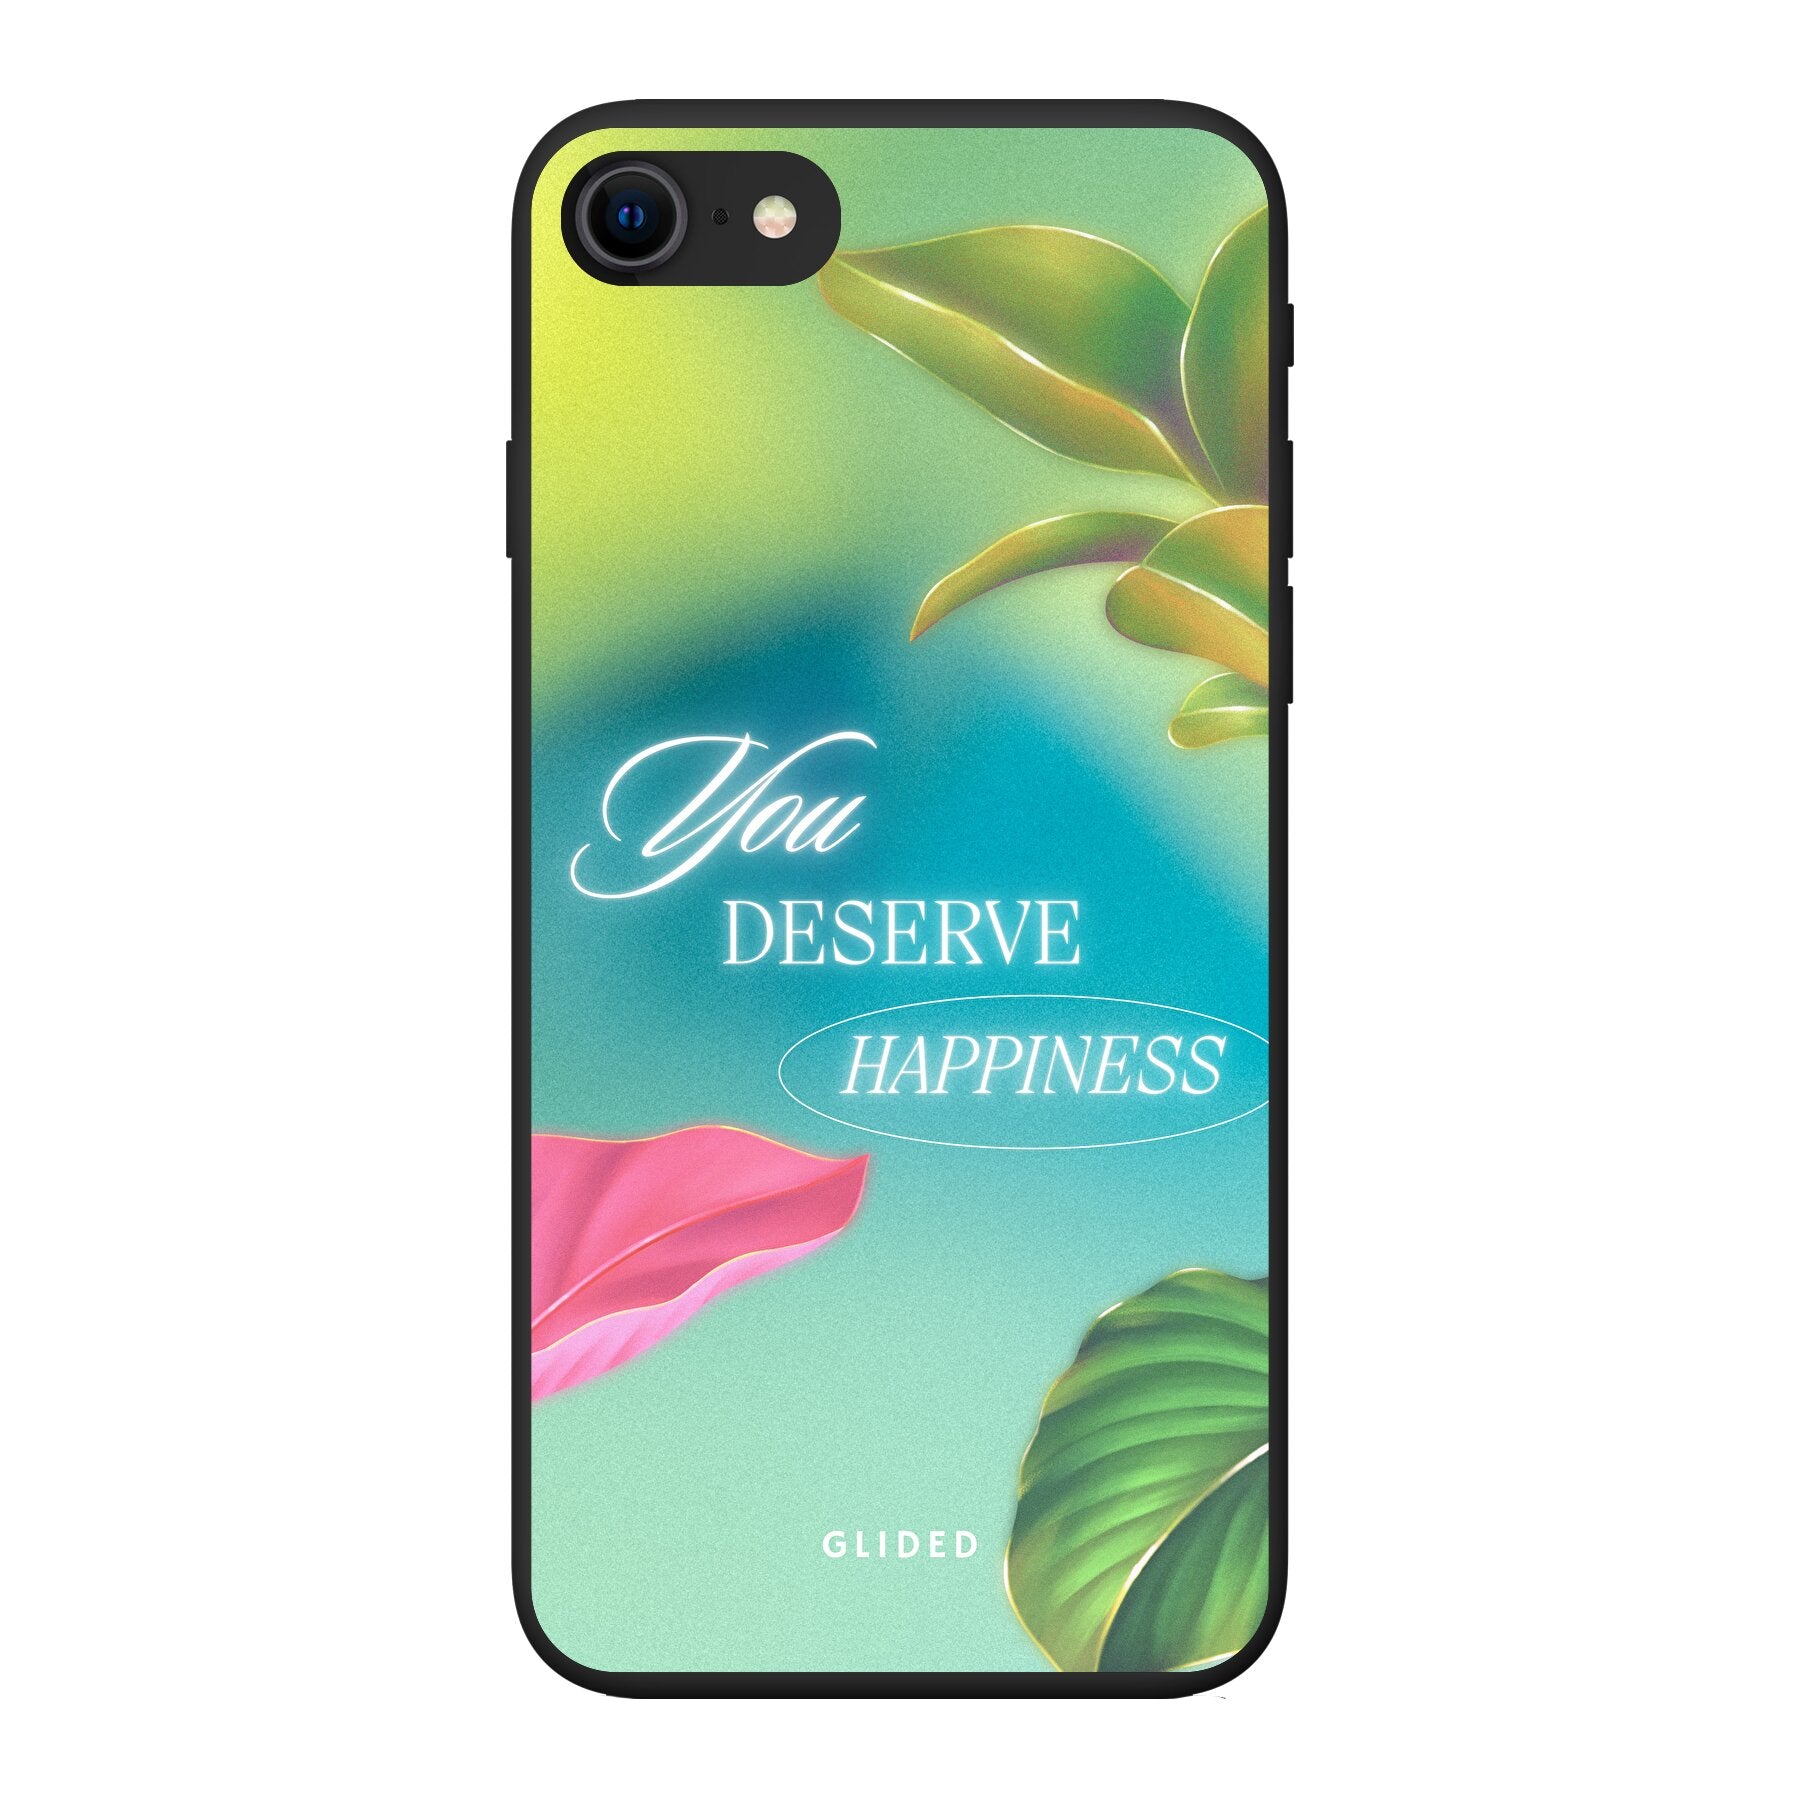 Happiness - iPhone 8 - Biologisch Abbaubar